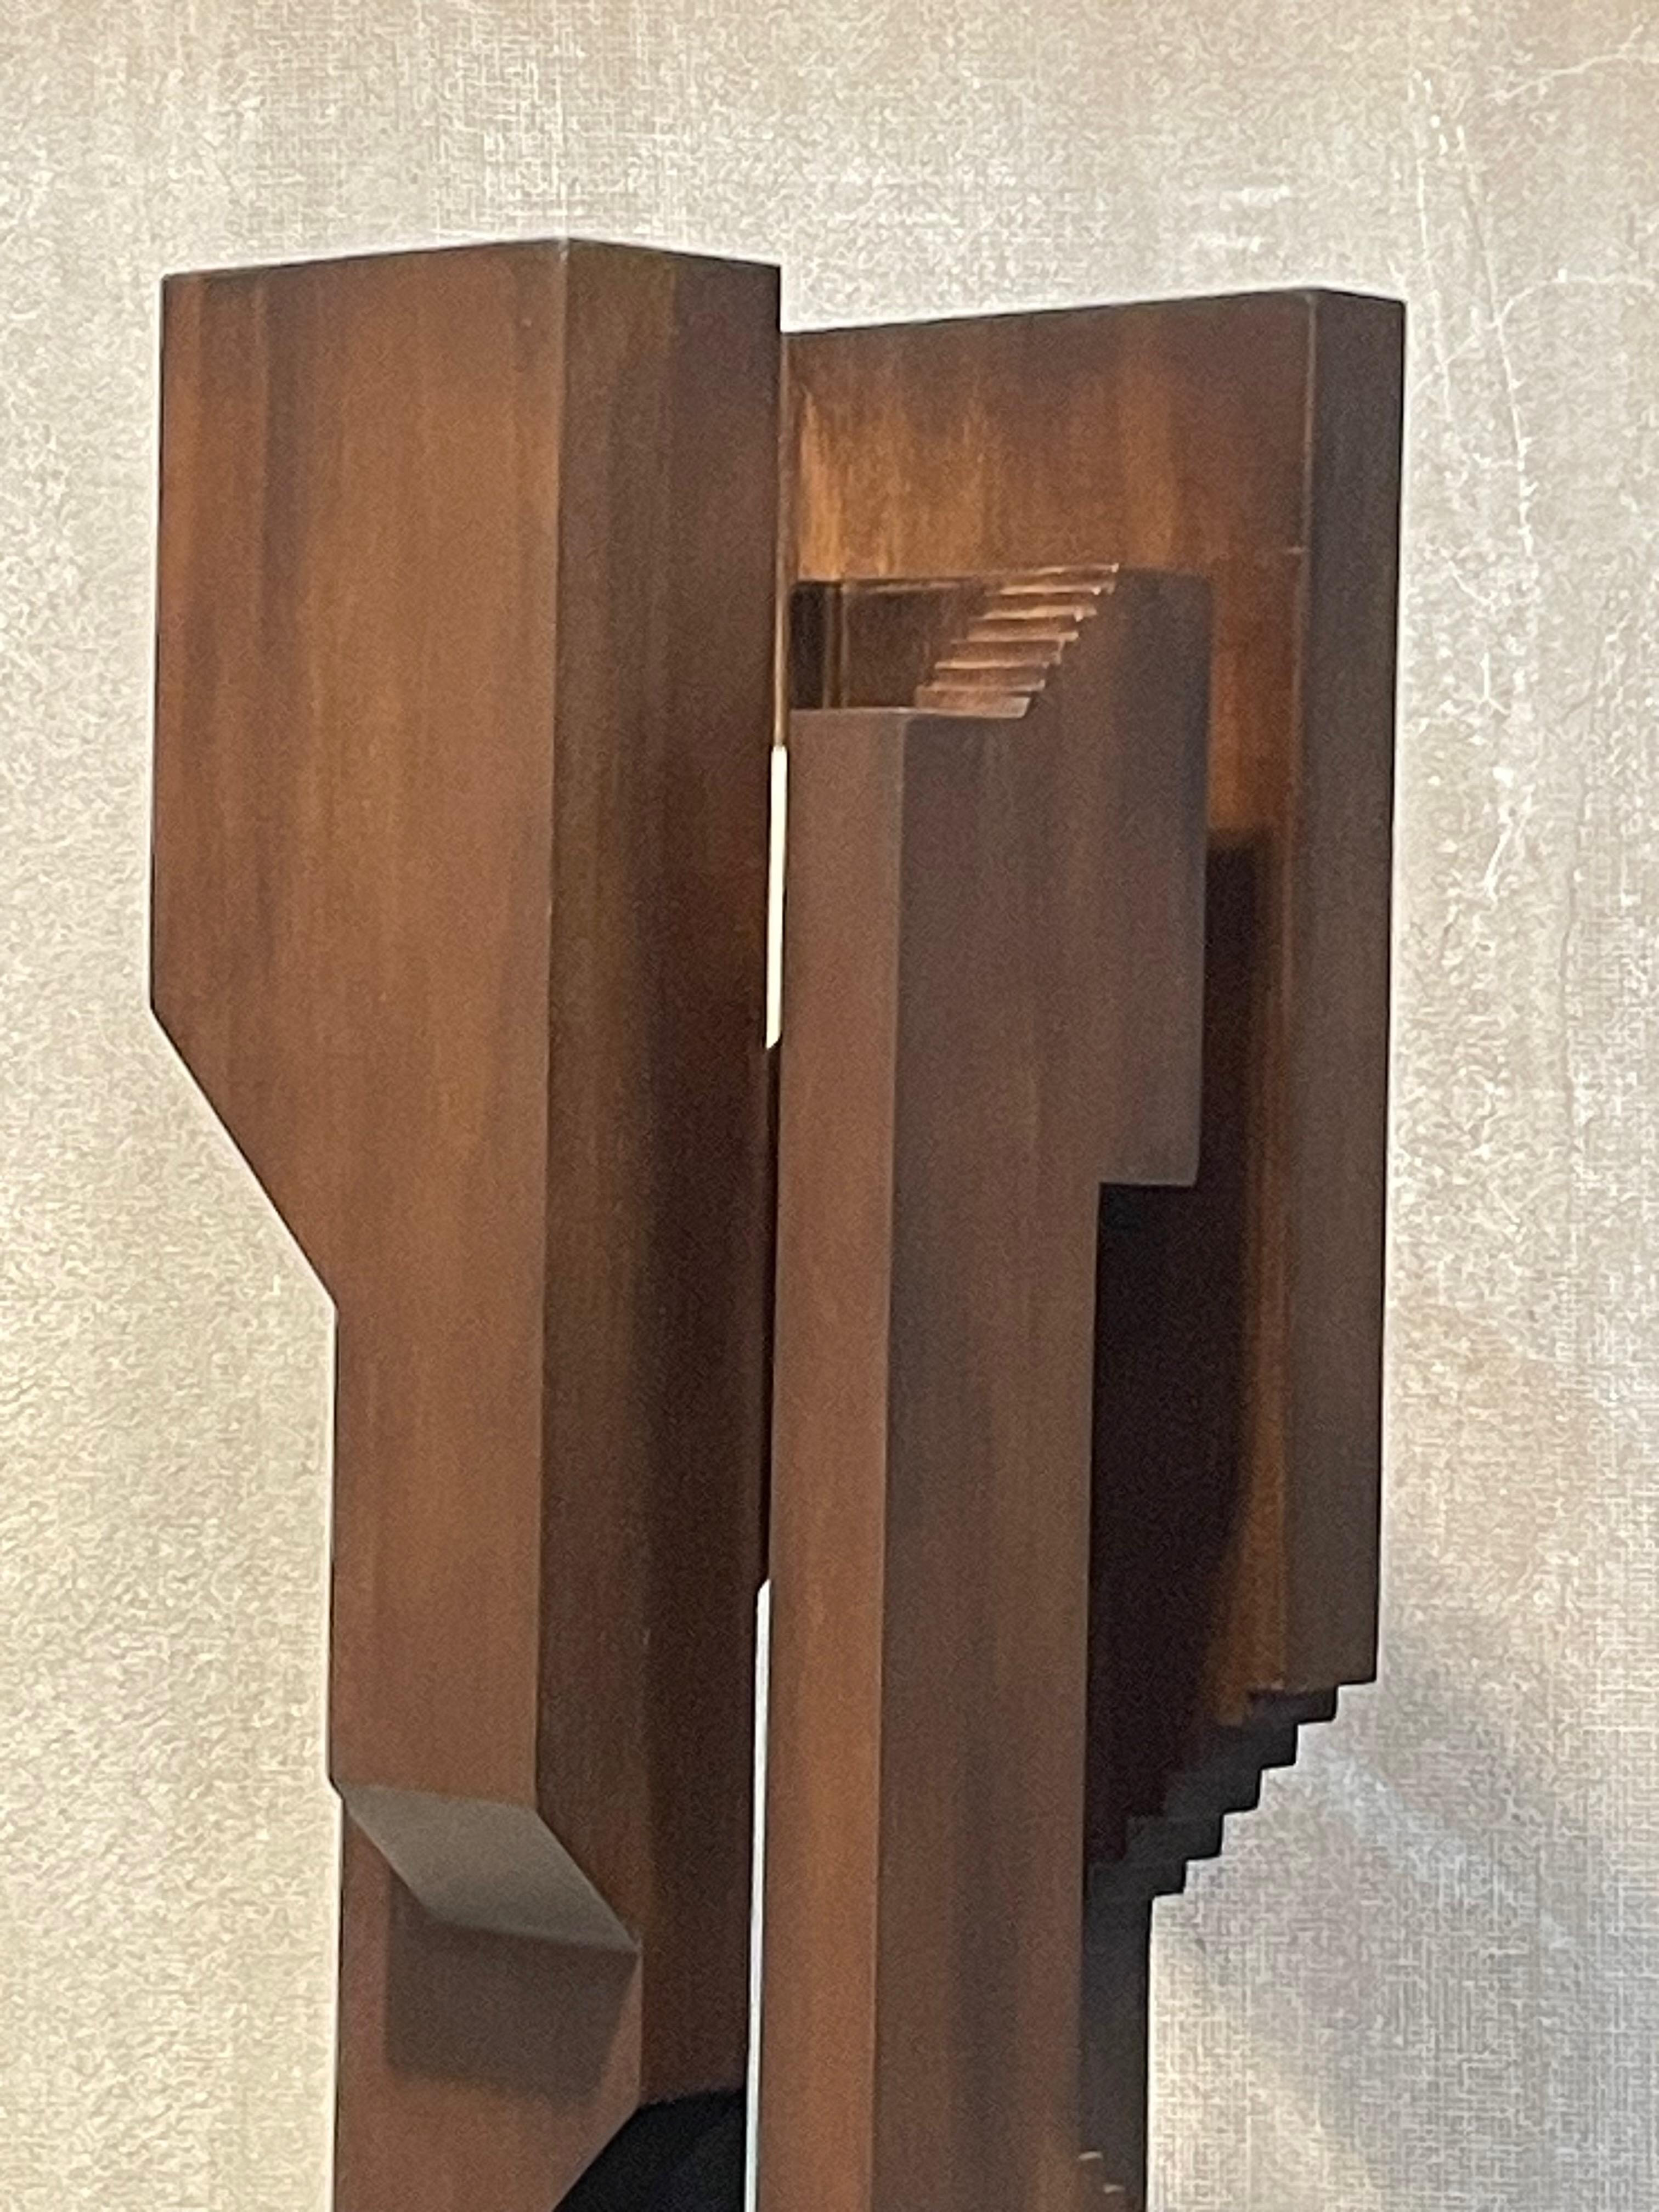 Espresso Brown Wooden Abstract Sculpture By David Umemoto, Canada, Contemporary  For Sale 1